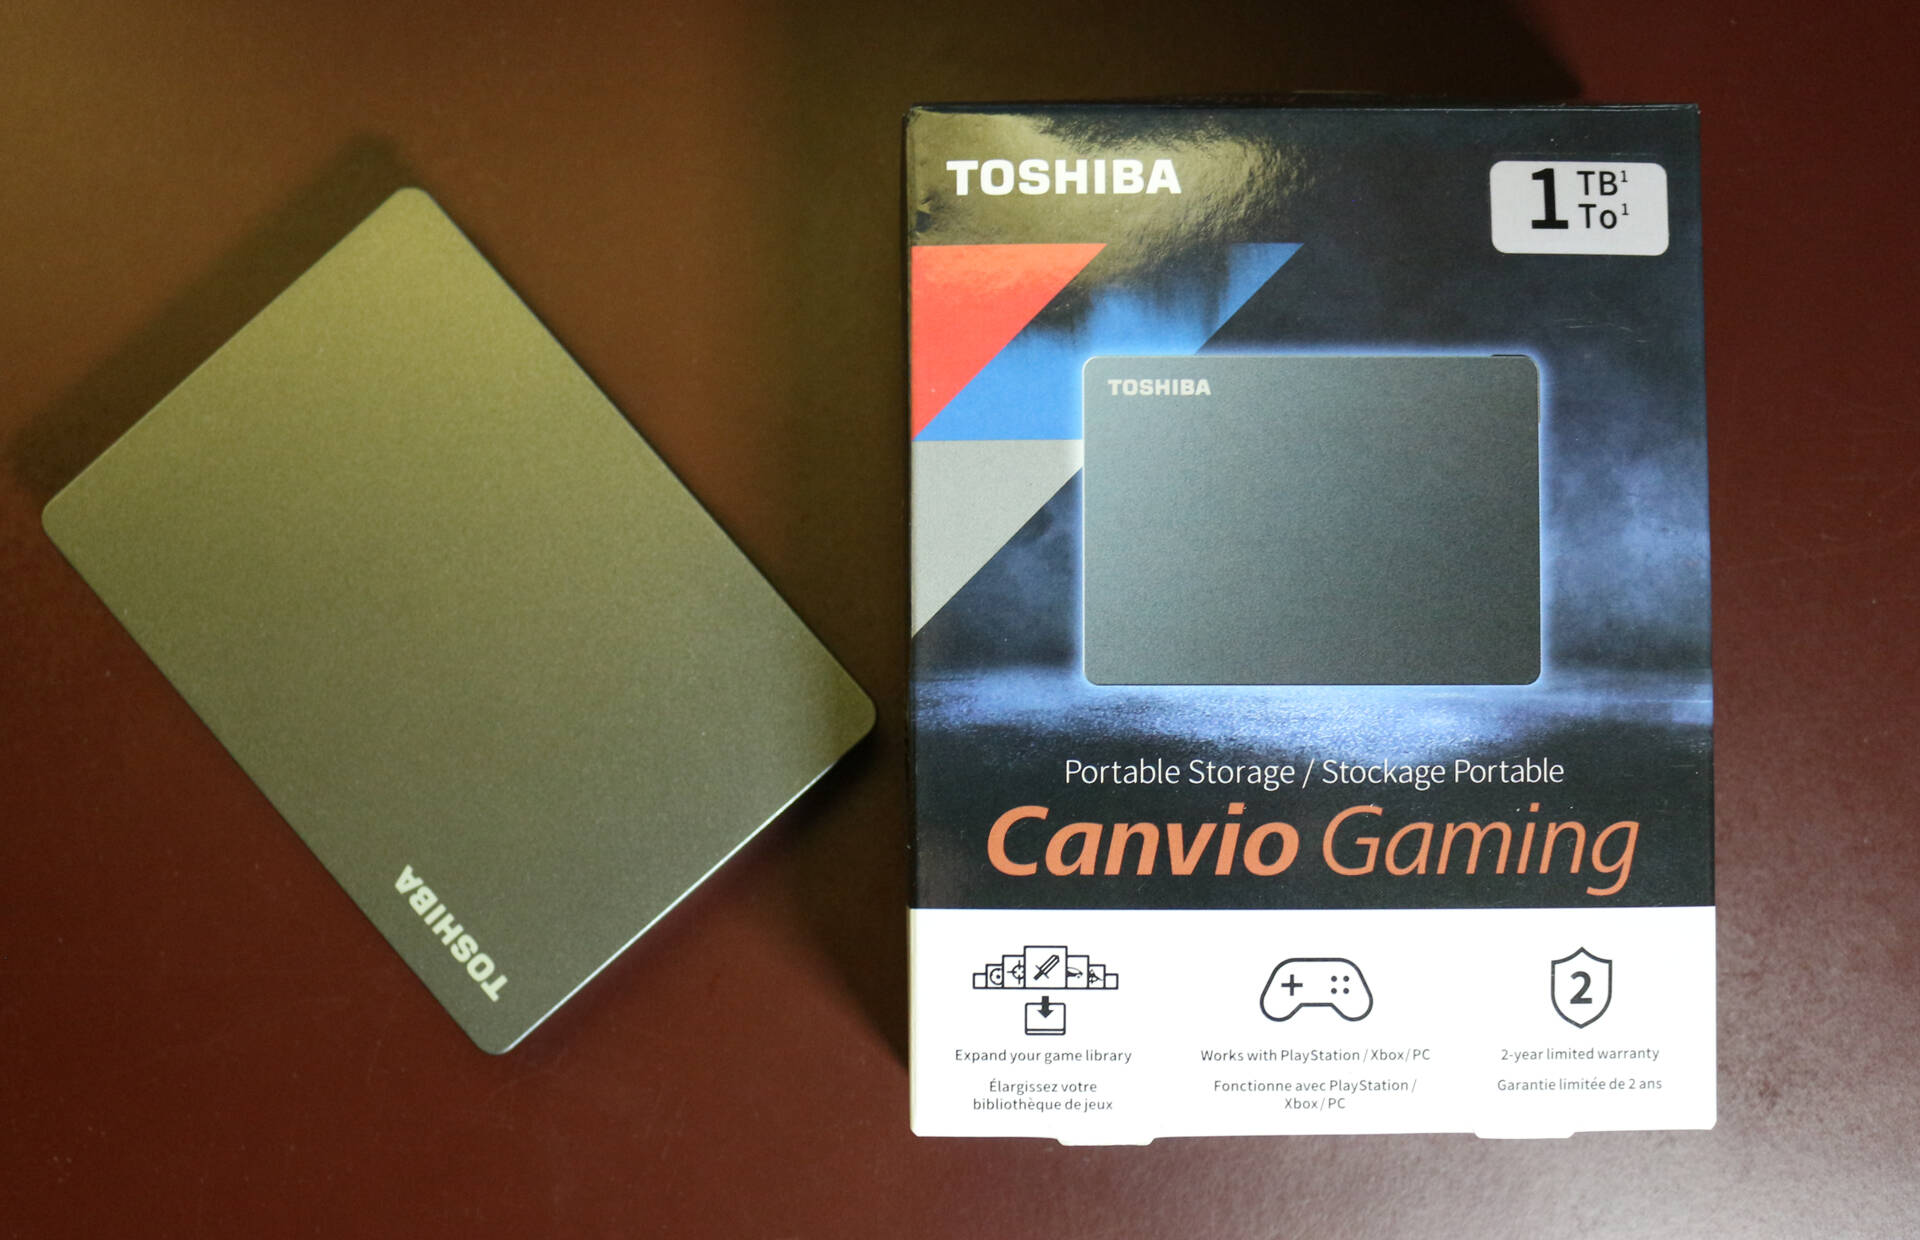 Toshiba Canvio Gaming